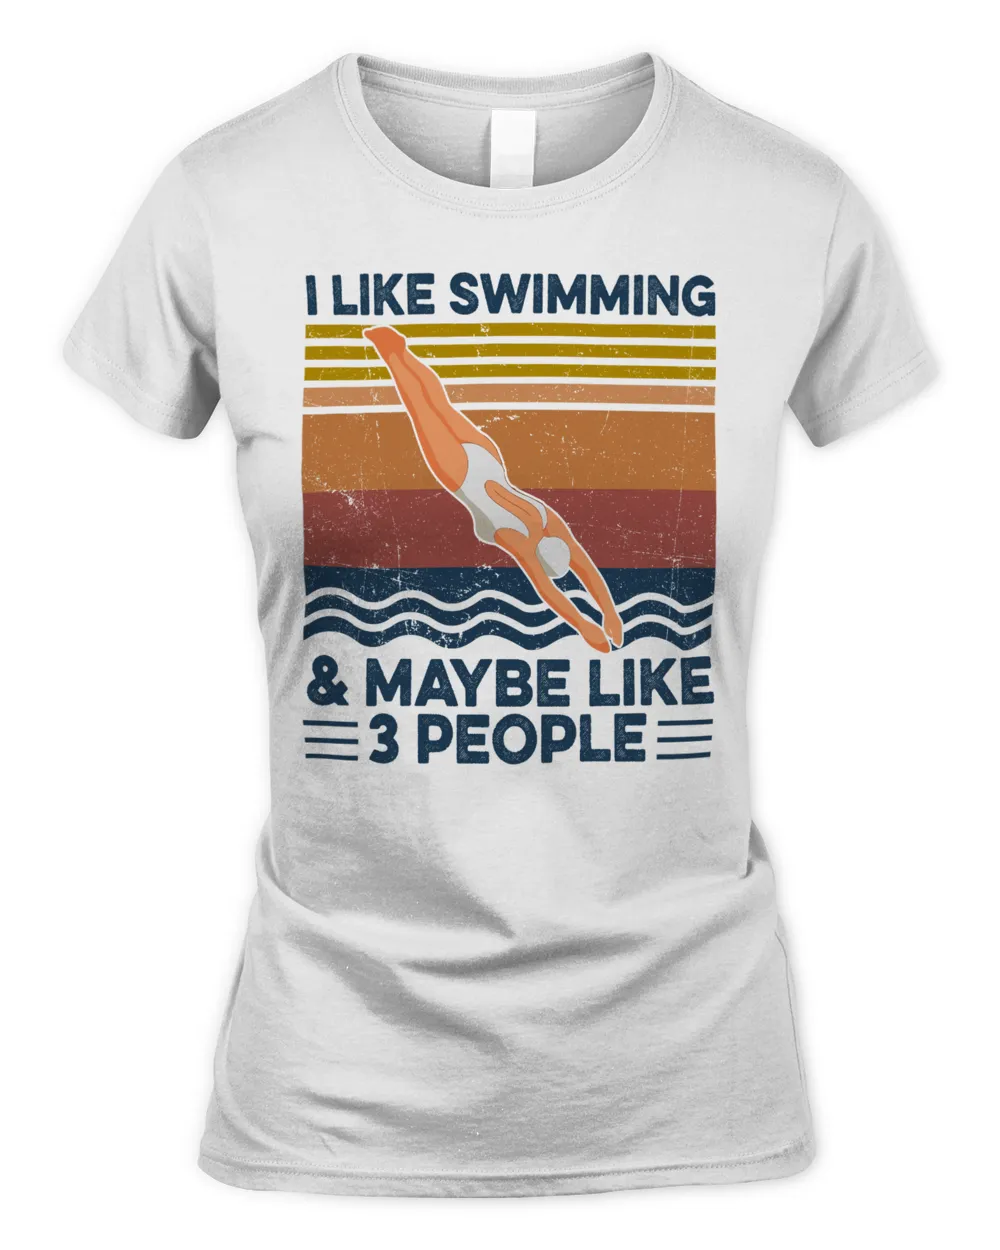 I like swimming and maybe like 3 people